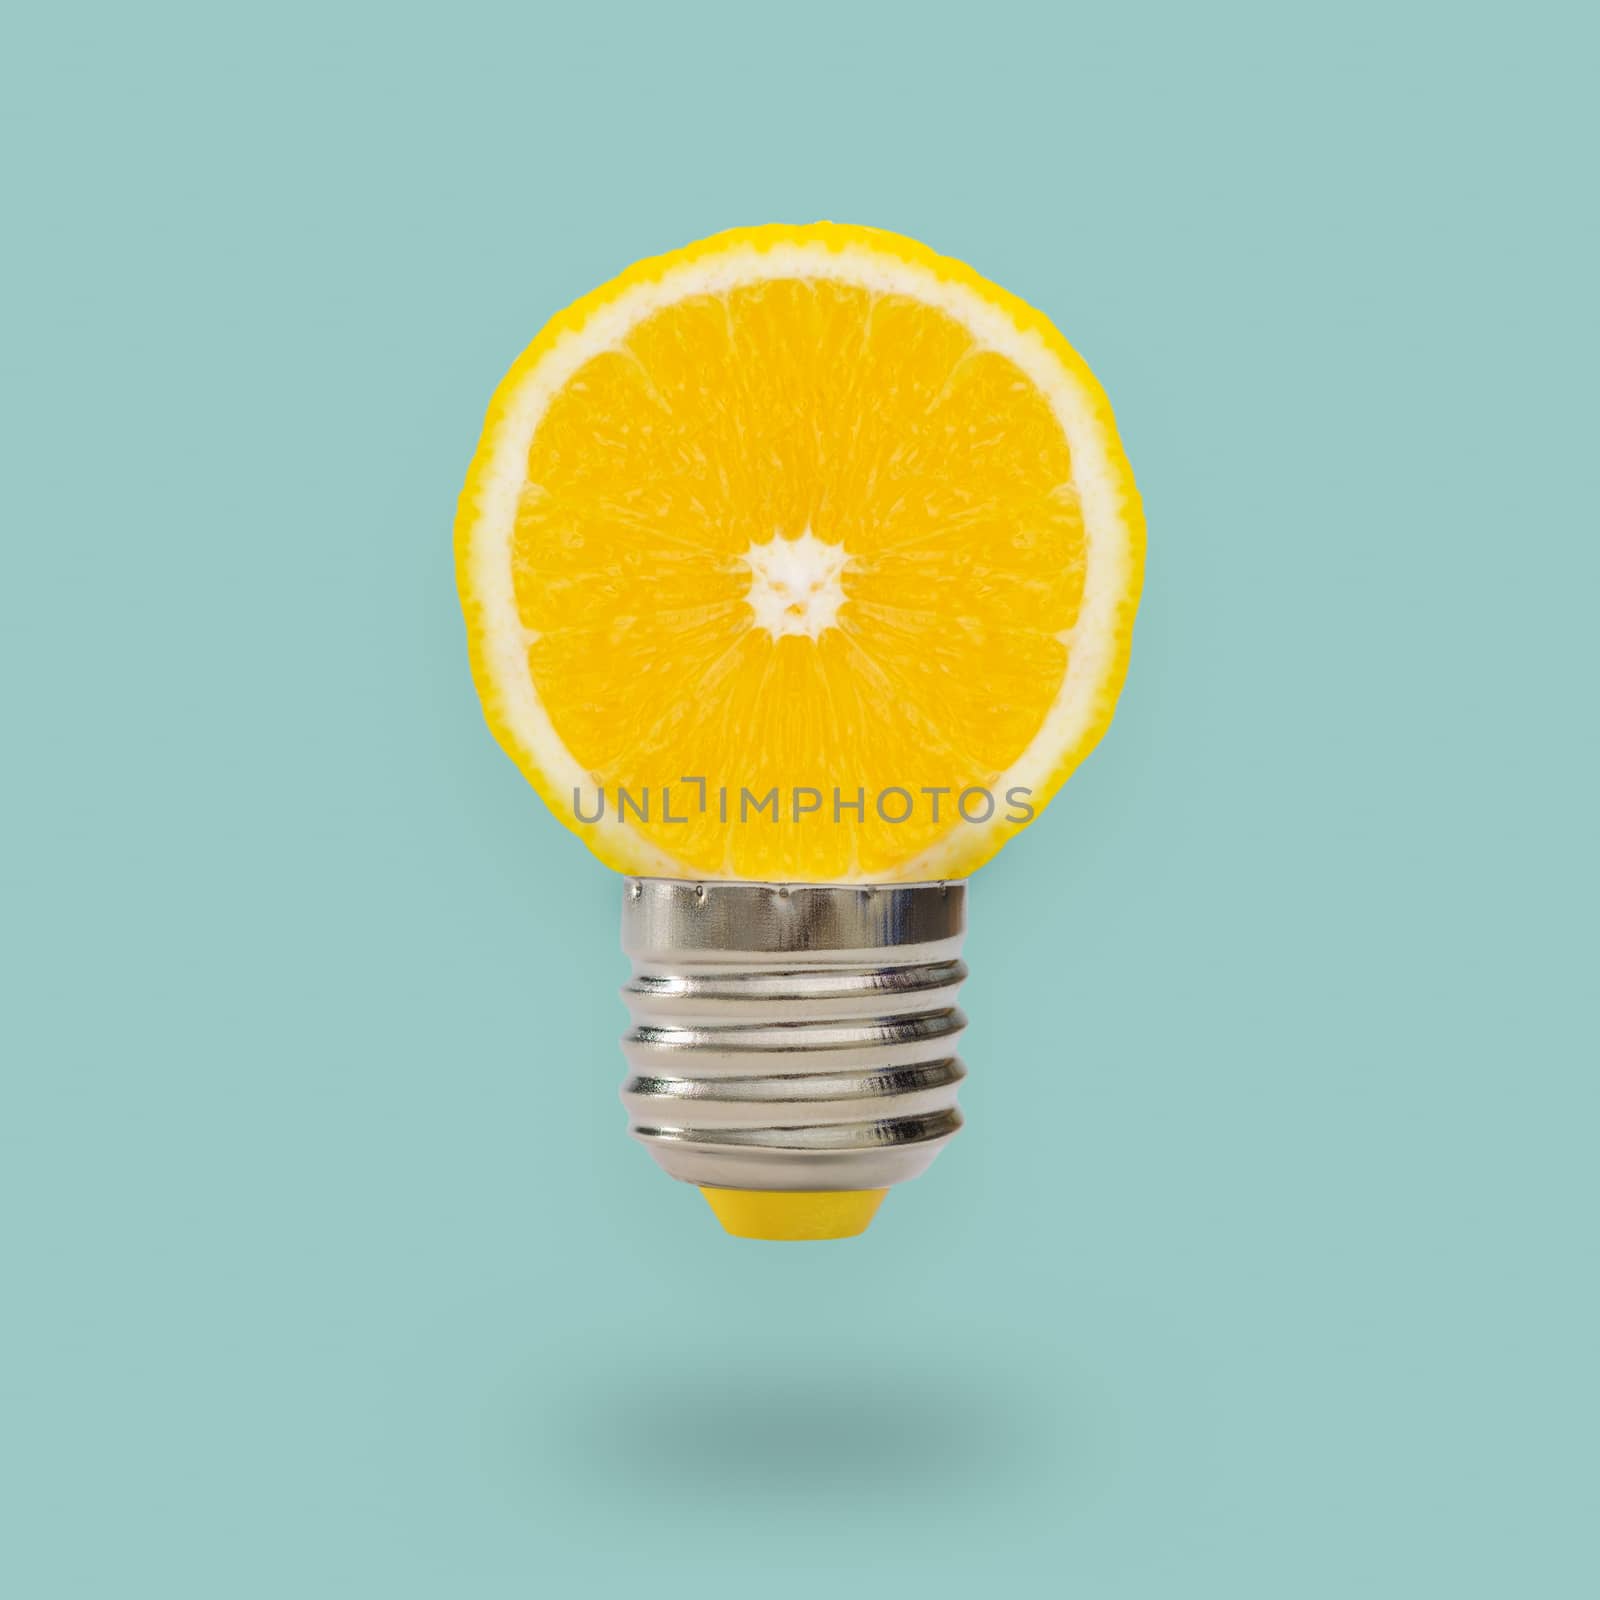 Yellow Lemon light bulb on bright blue background. Summer fun concept.